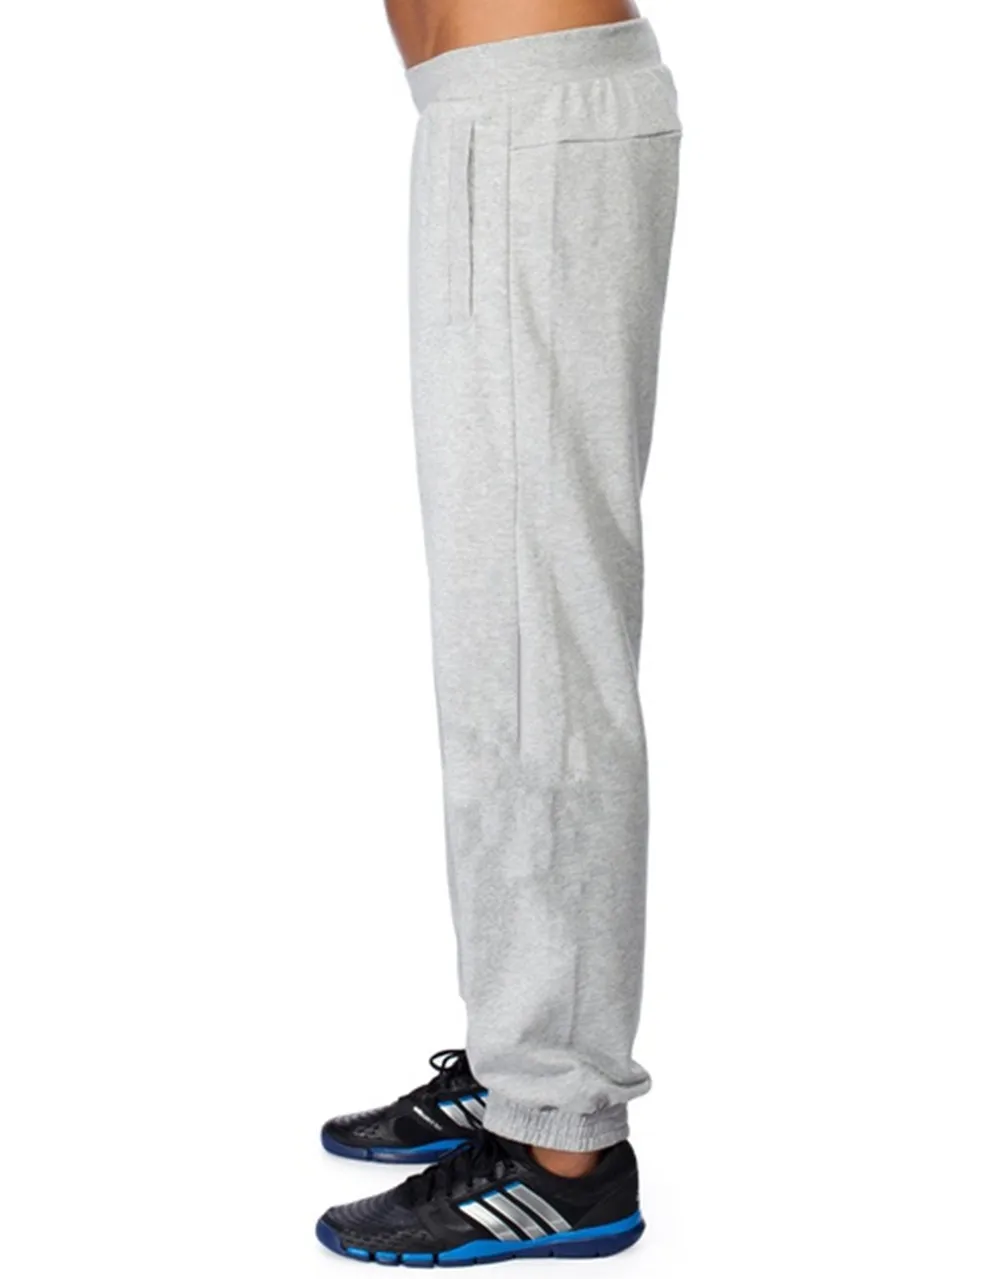 Cotton Blank Sweatpants Sport Clothing For Men Wholesale - Buy ...